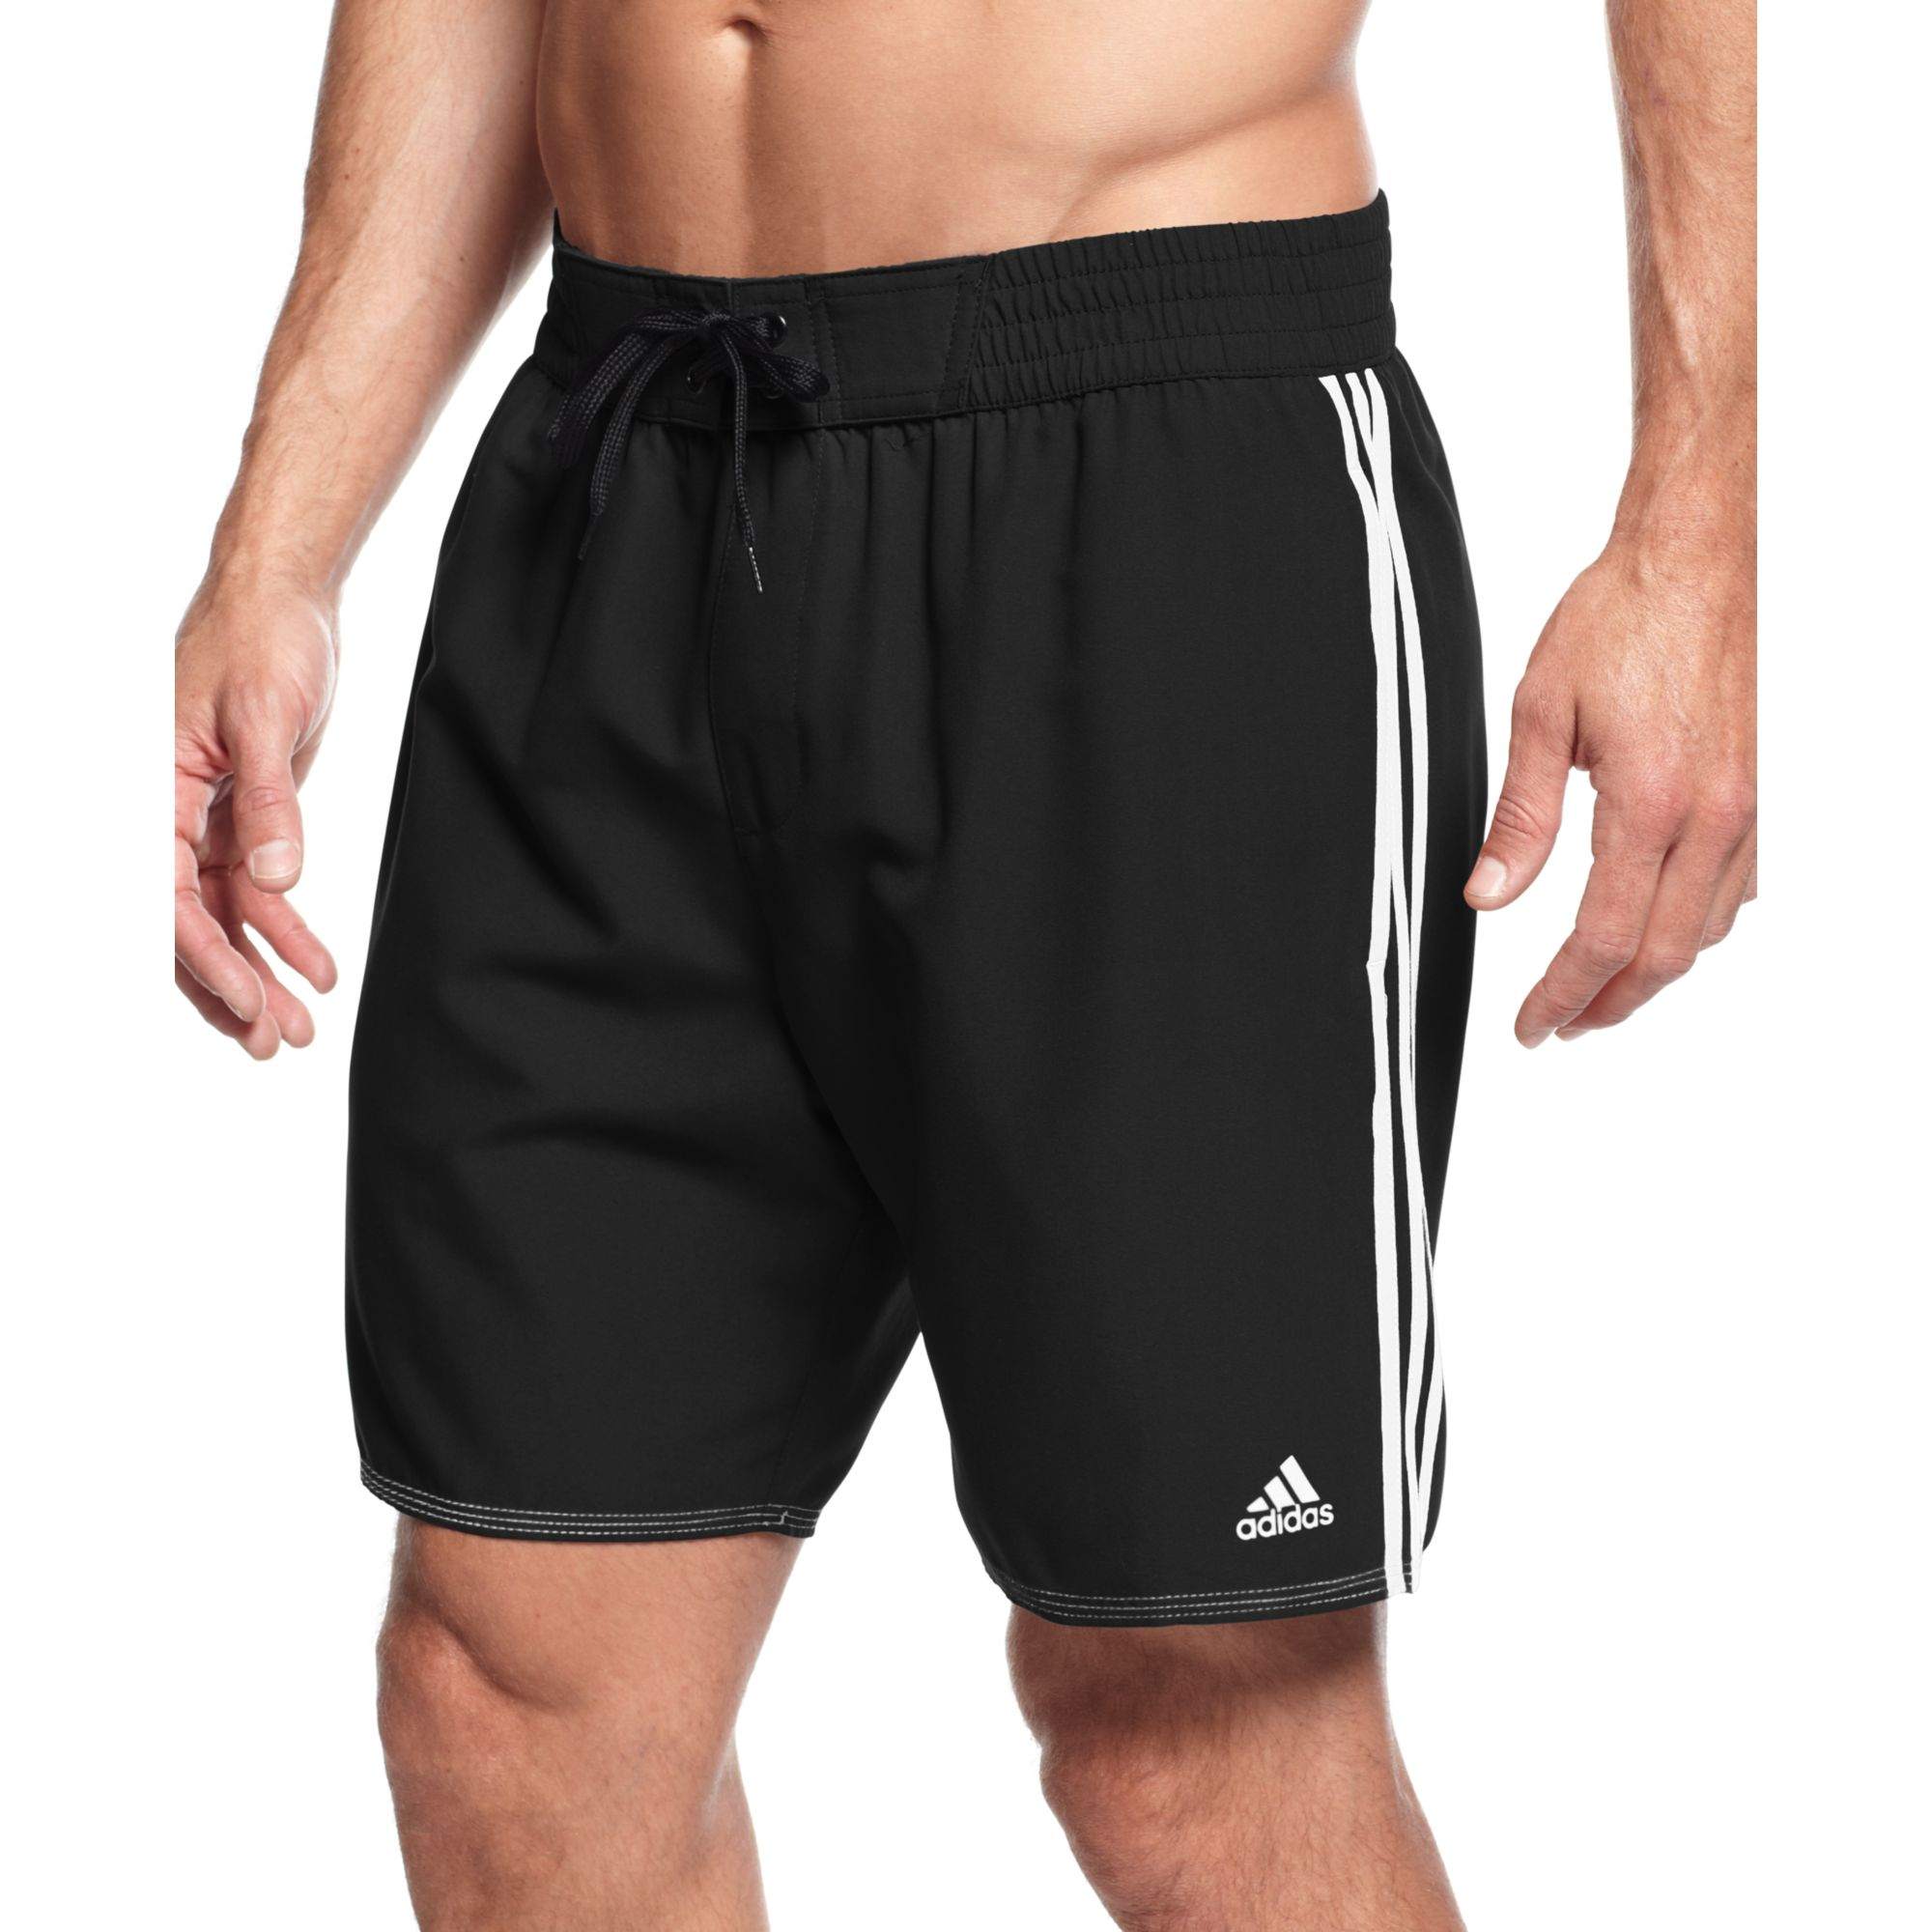 adidas men's shorts